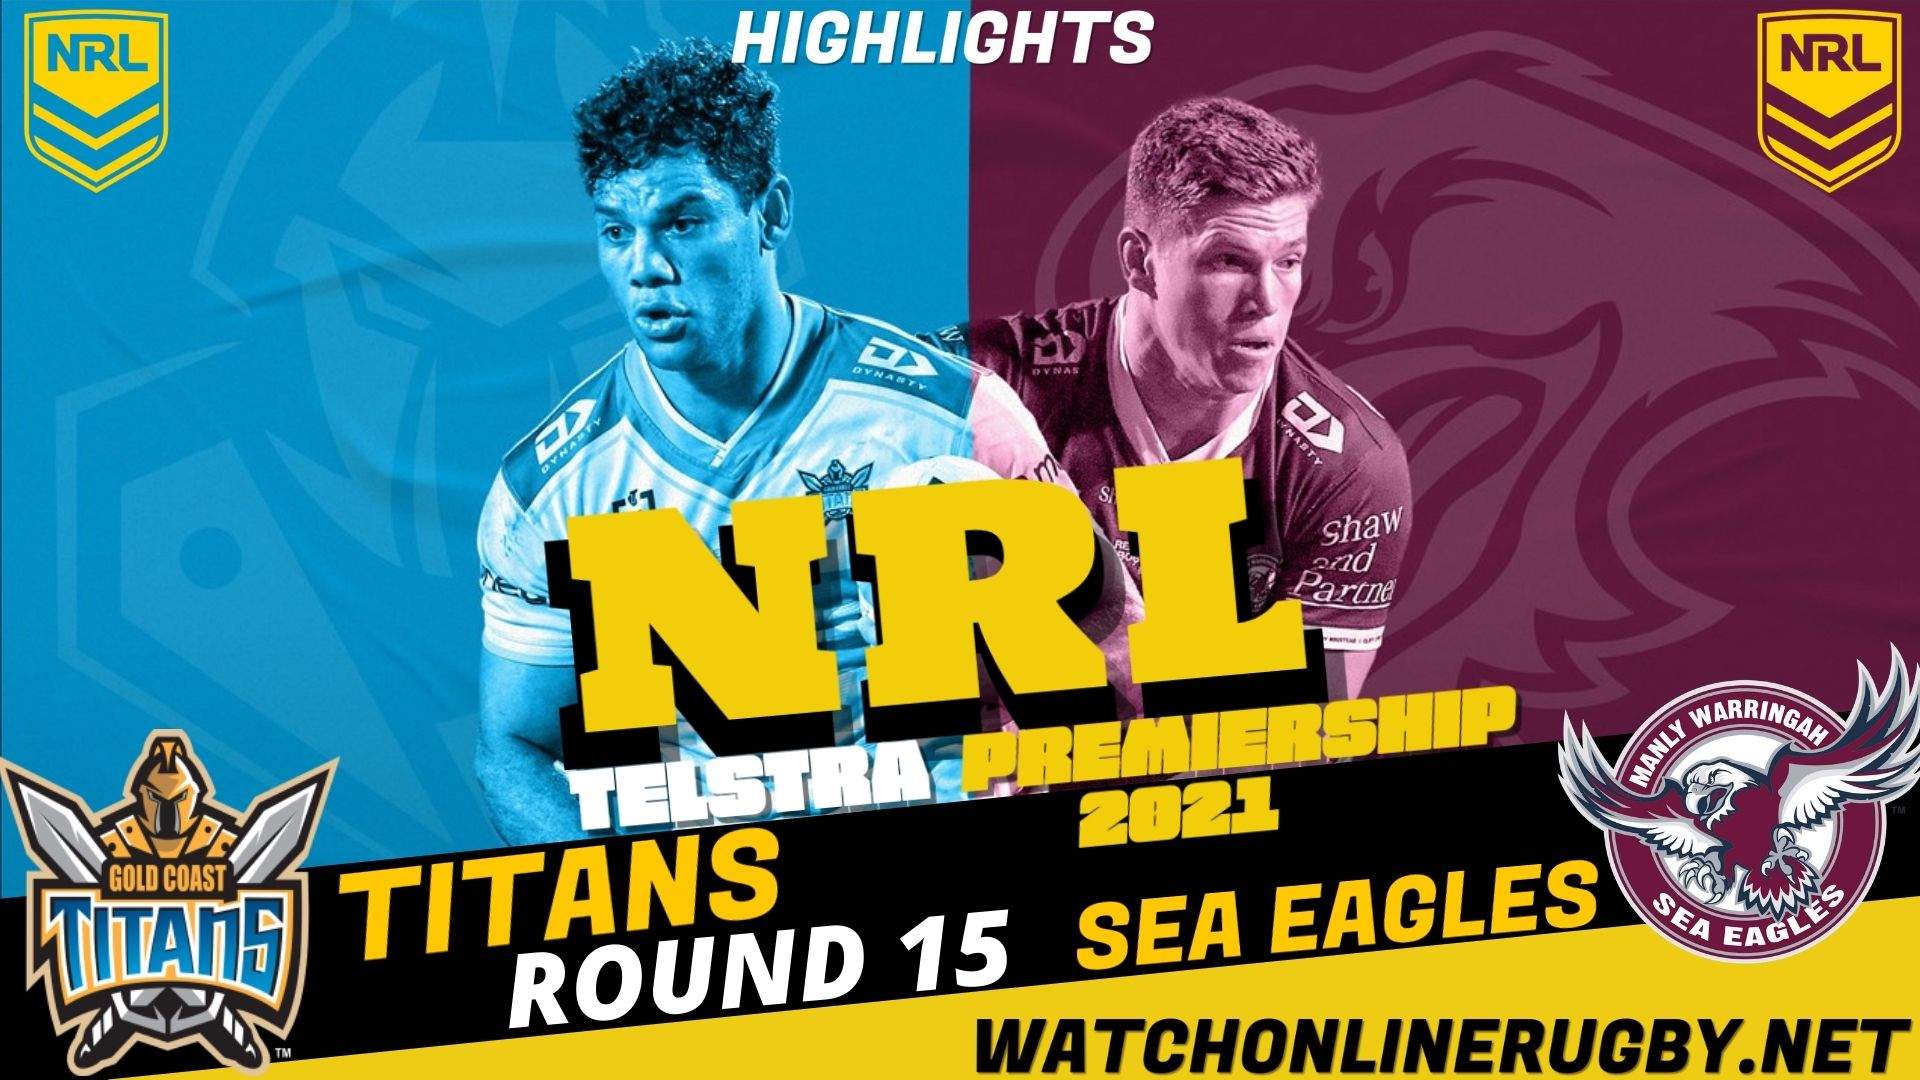 Titans Vs Sea Eagles Highlights RD 15 NRL Rugby